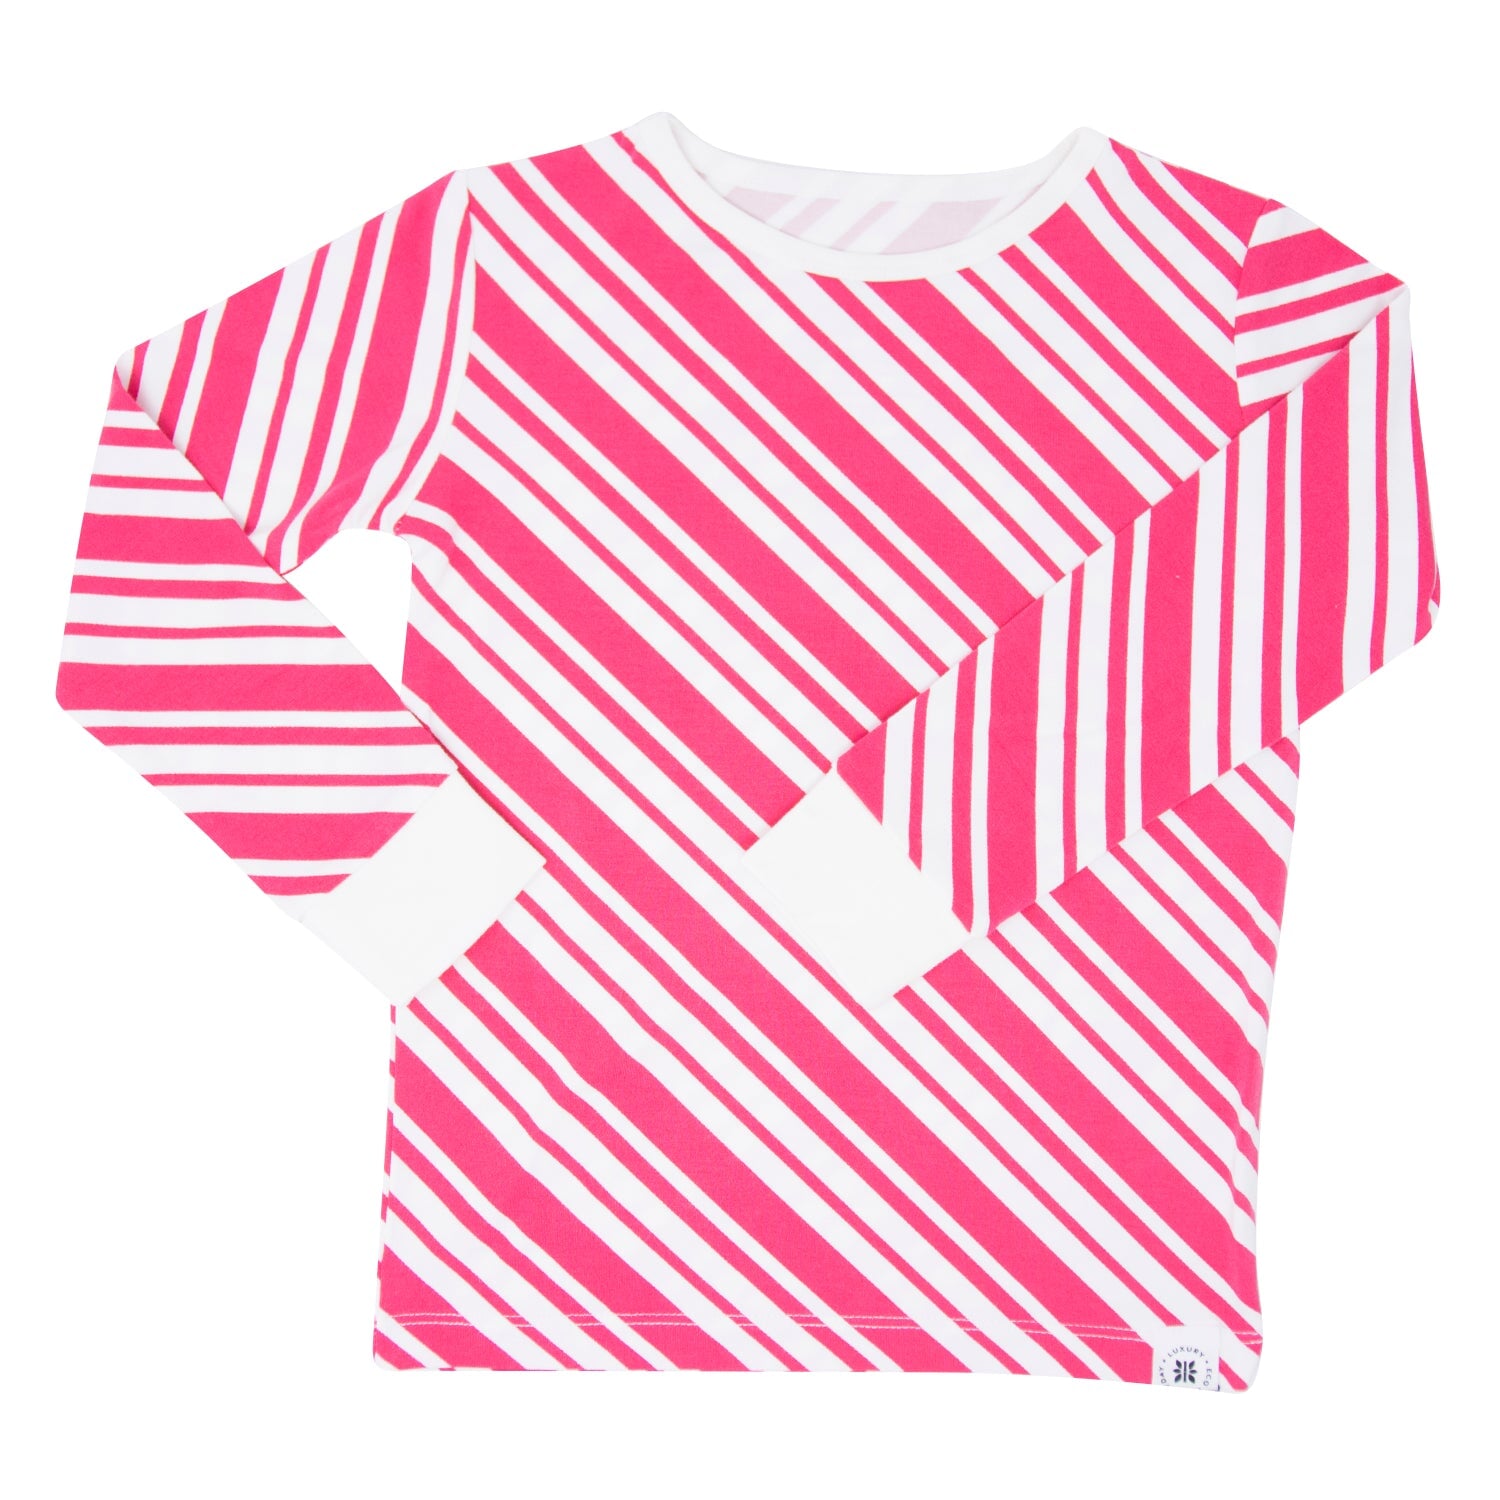 Big Kid Pajama - Candy Cane Stripe